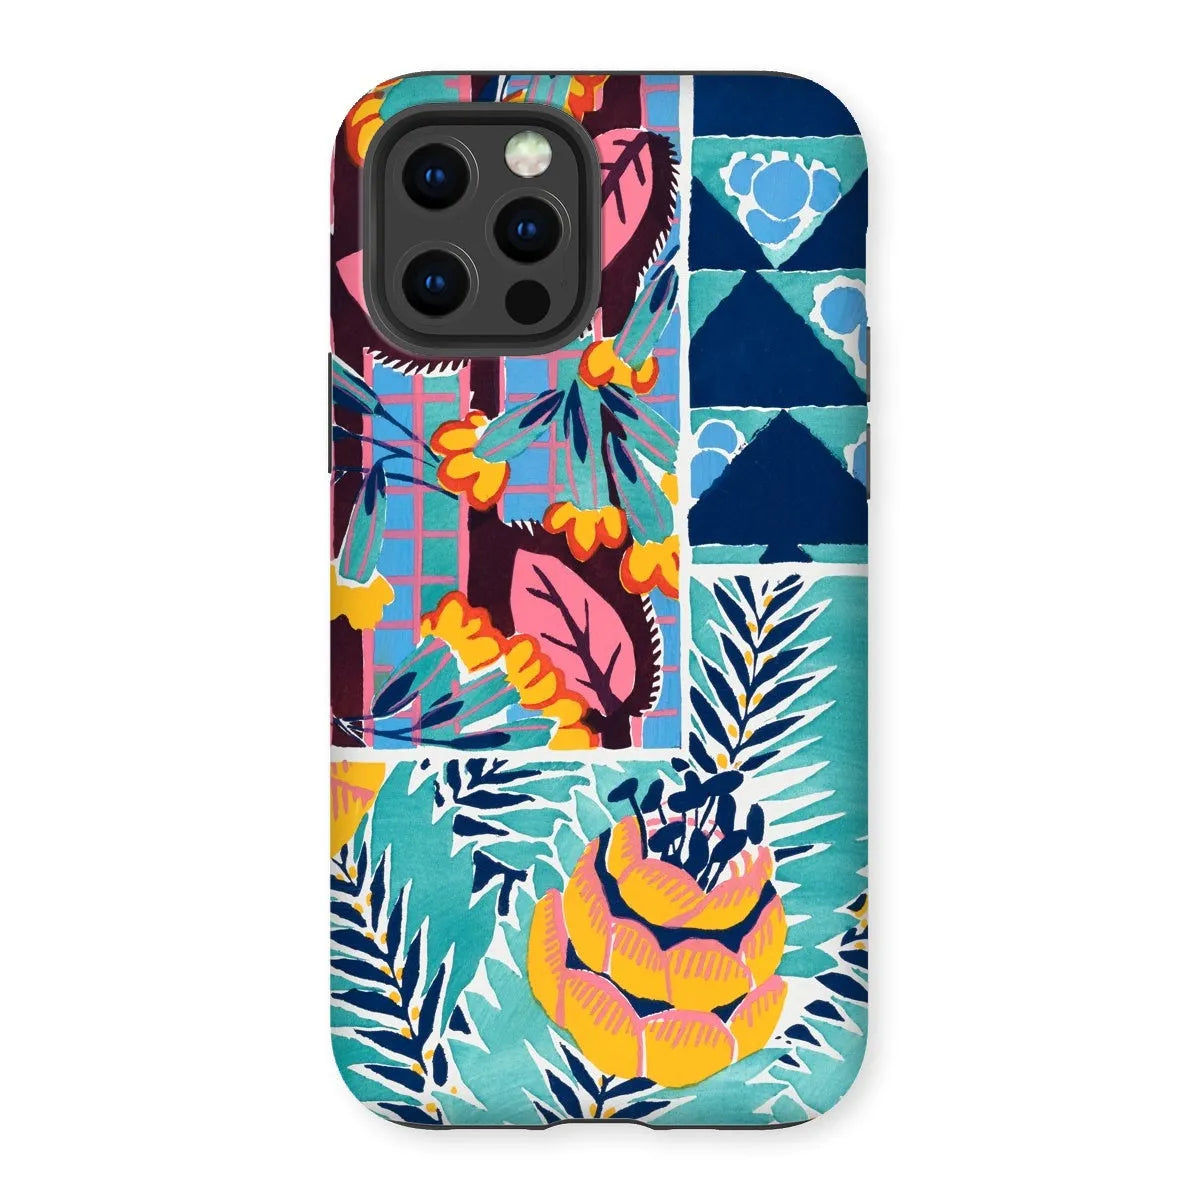 Fabric & Rugs - Pochoir Patterns Phone Case - E. A. Séguy - Iphone 12 Pro / Matte - Mobile Phone Cases - Aesthetic Art